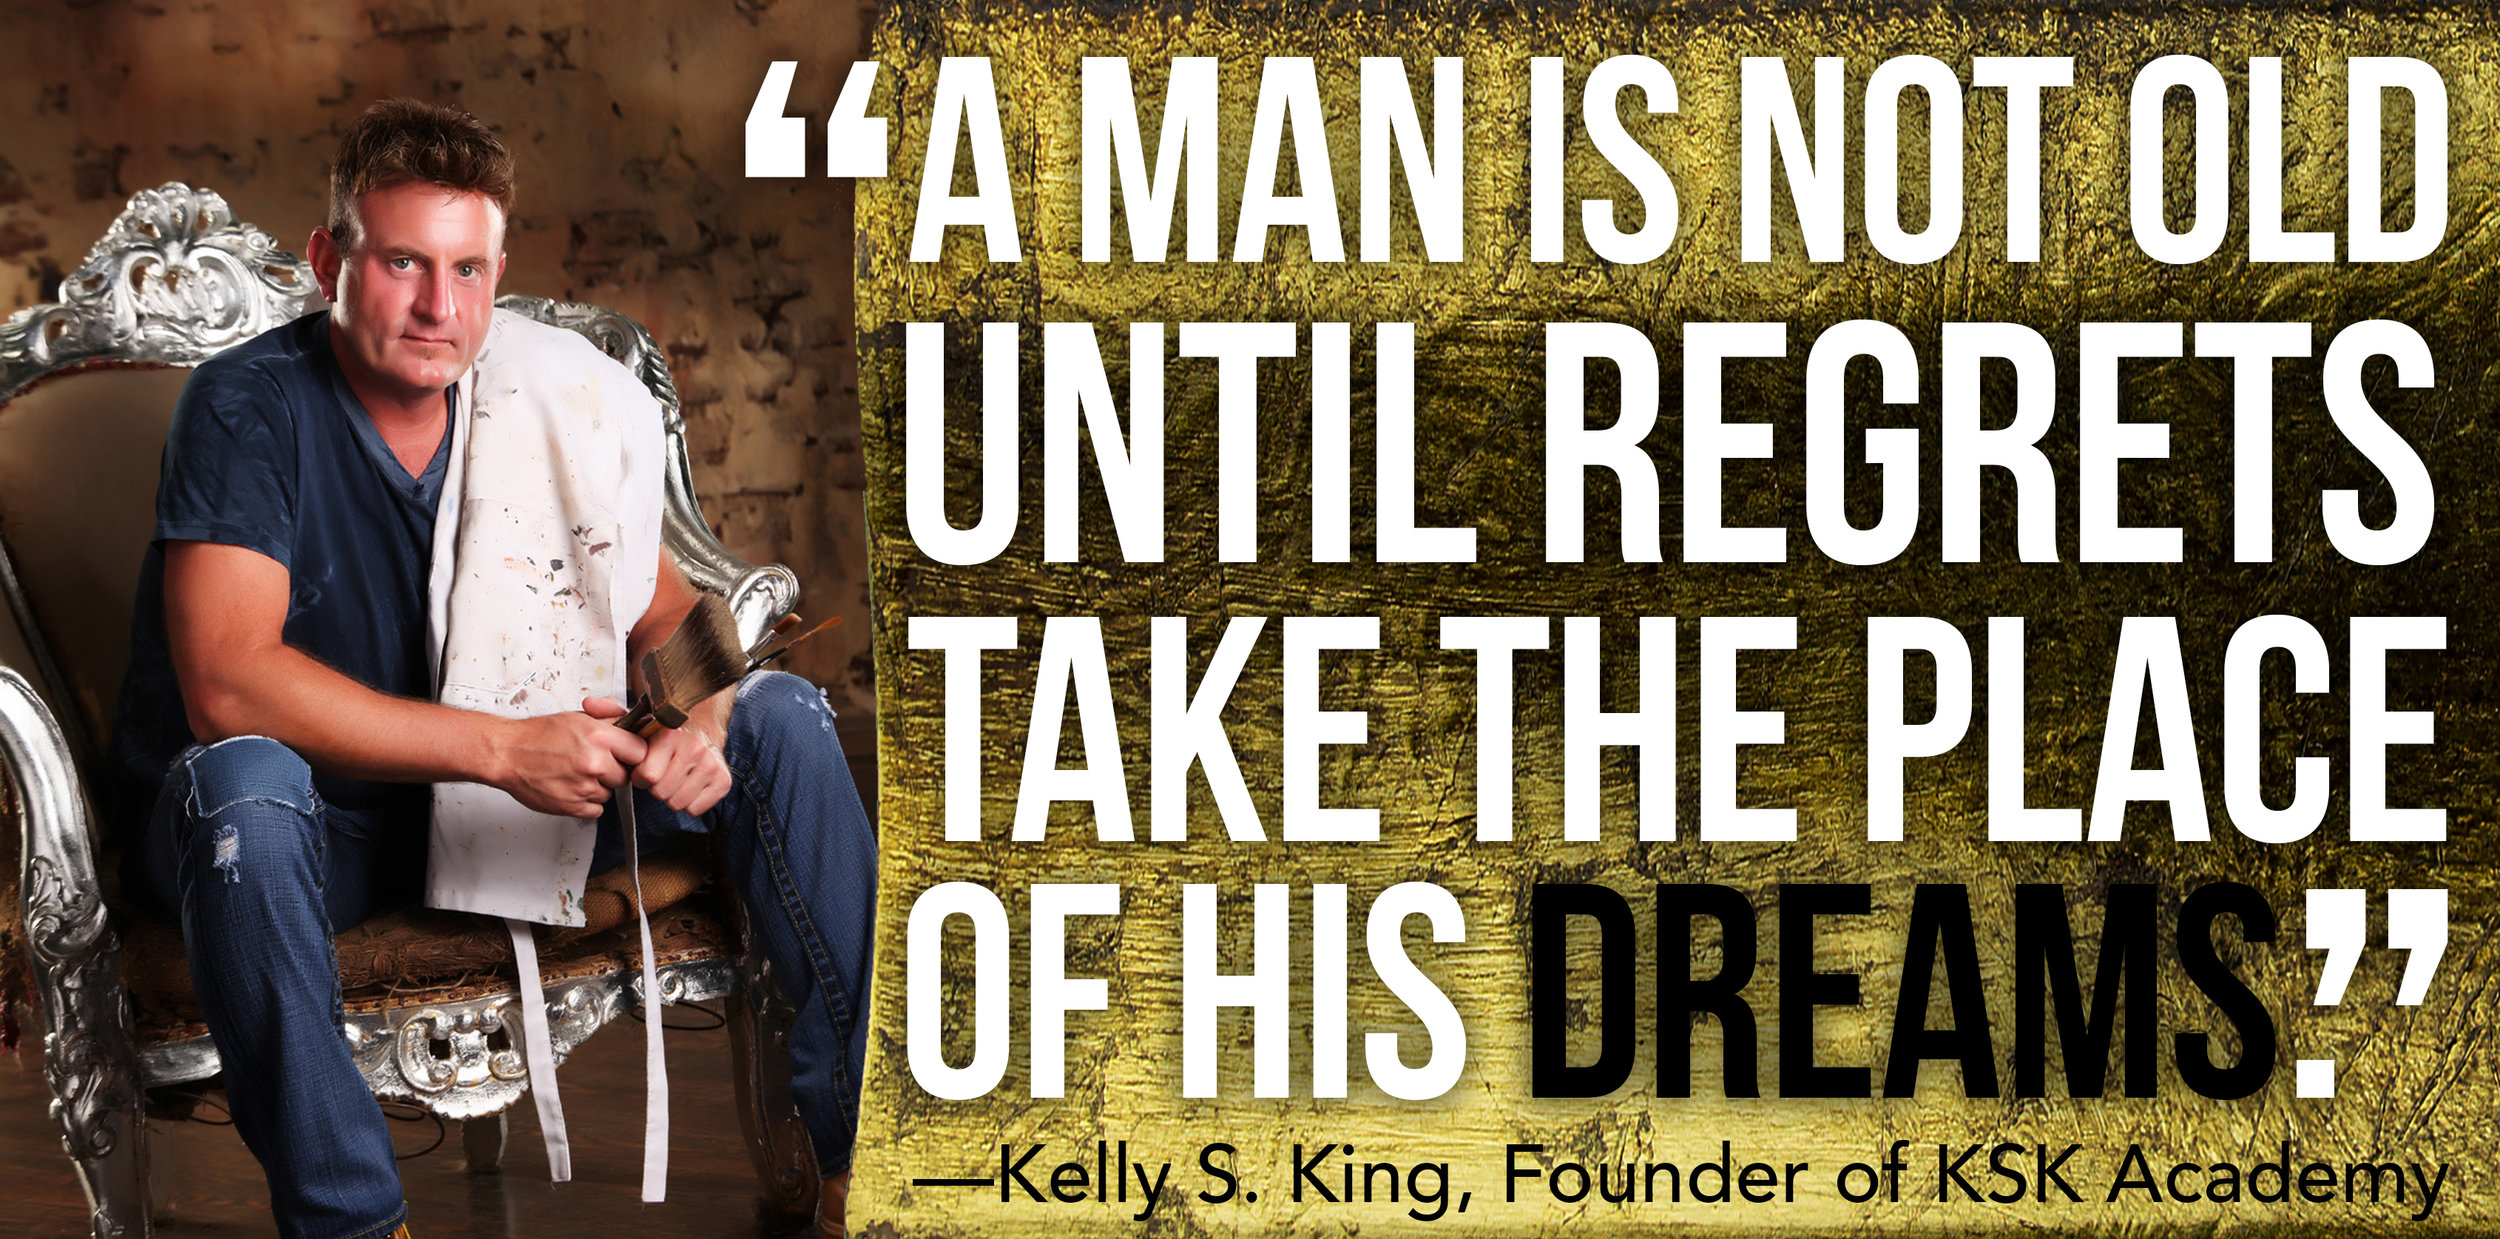 Kelly s. king